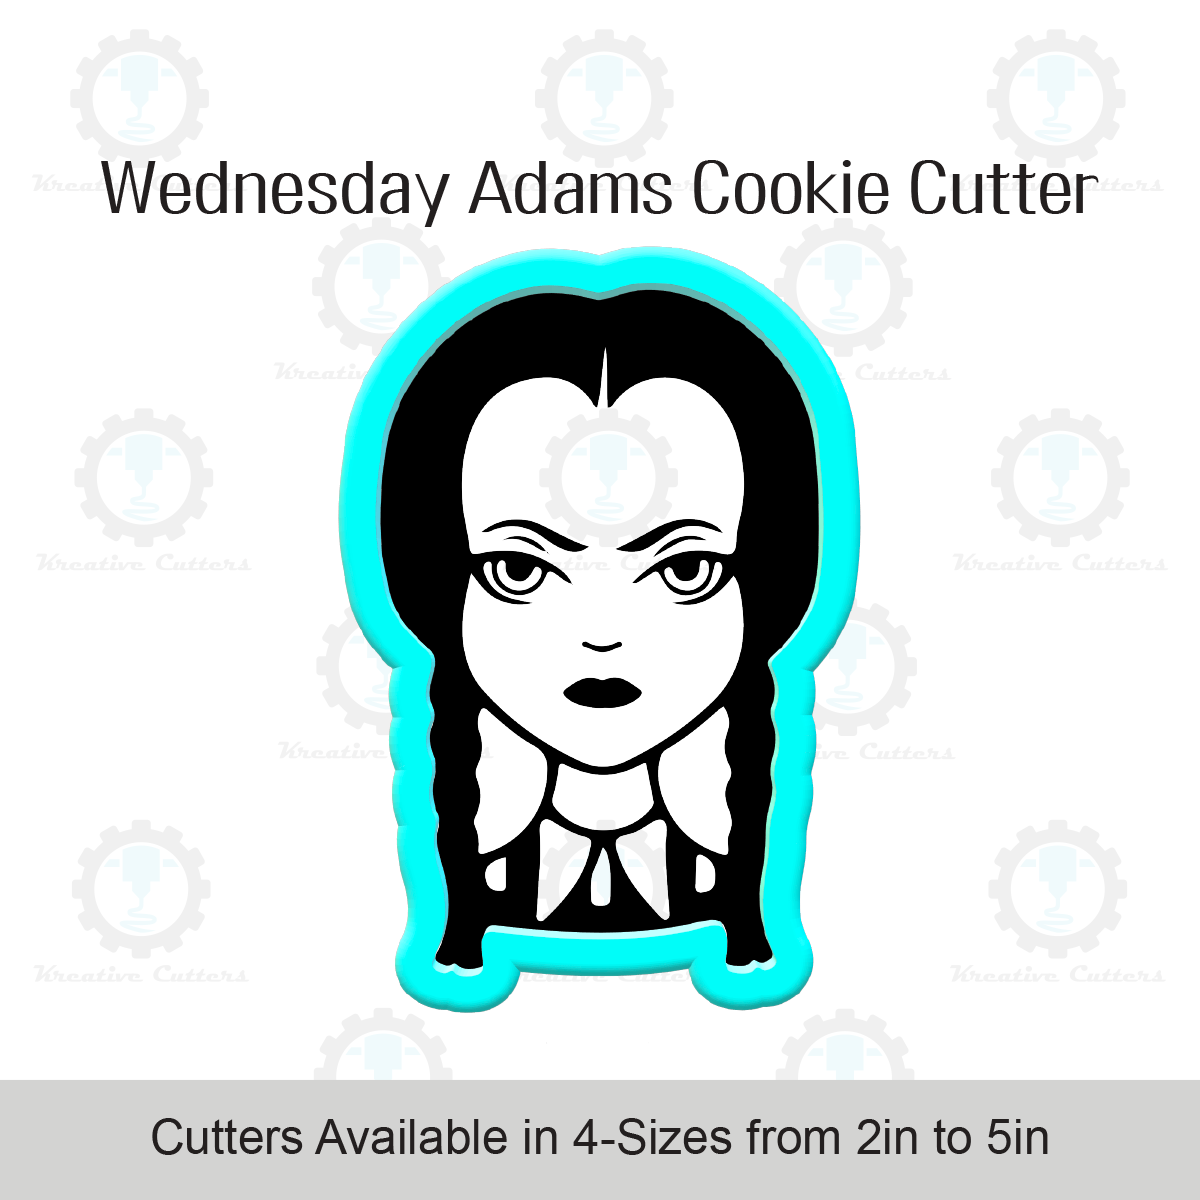 Wednesday Adams Cookie Cutter